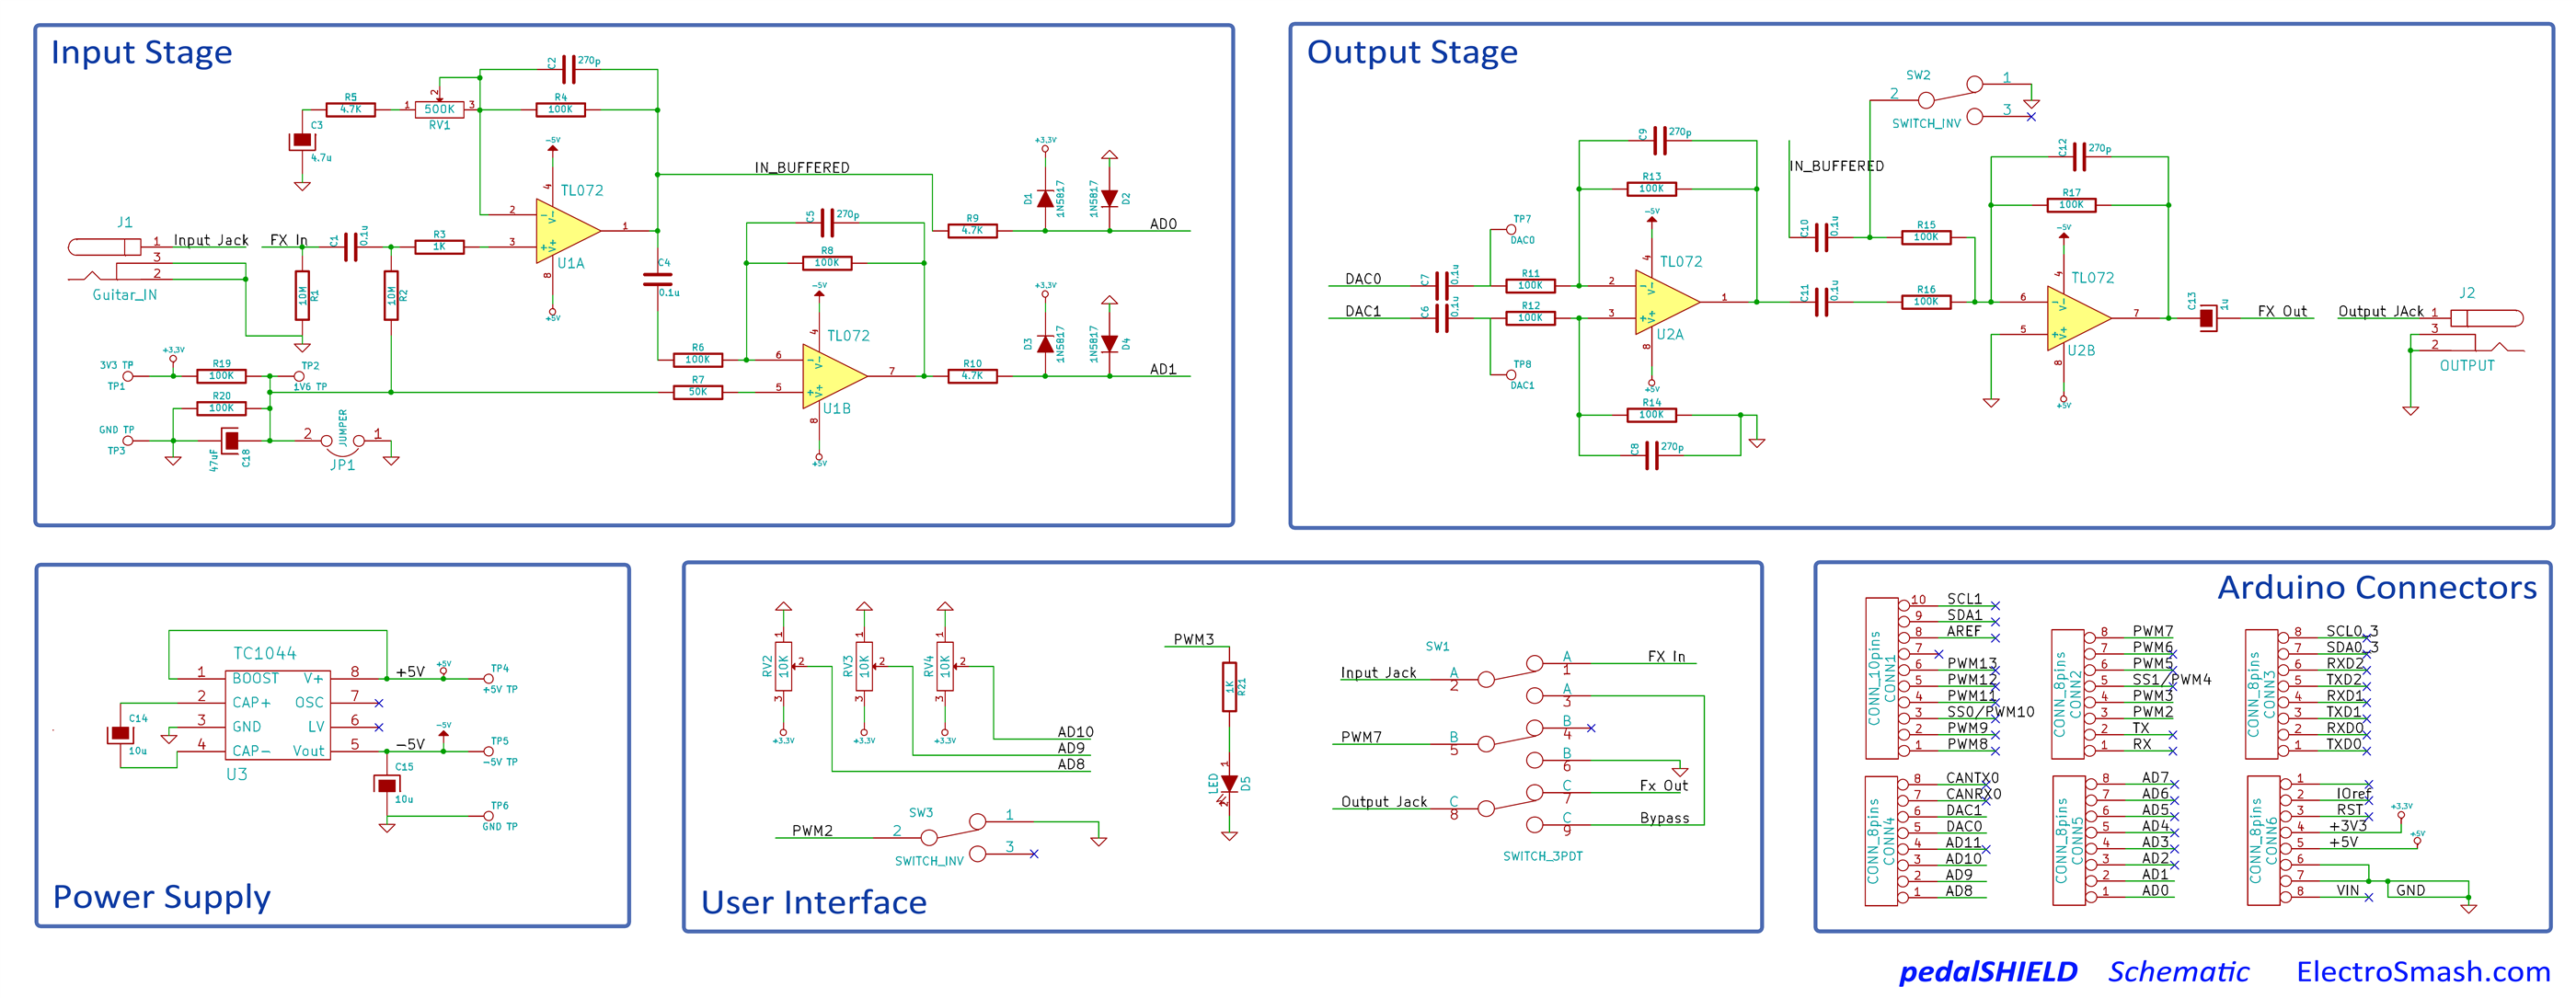 simple power amplifier circuit diagram